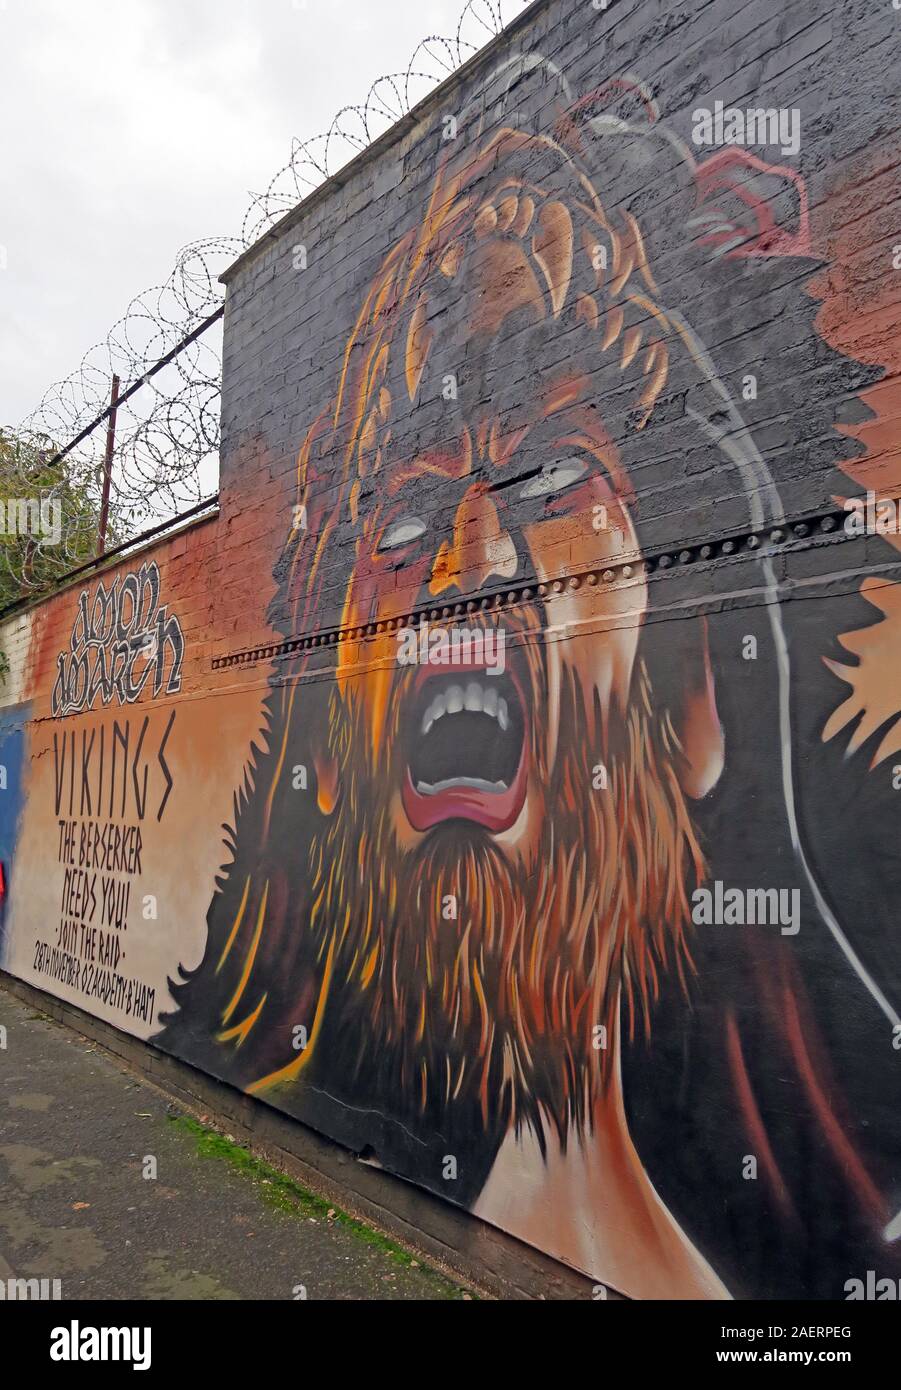 Amon Amarth trae Berserker tour, Graffiti urbano arte callejero, en Floodgate St, Digbeth, Bordesley Y Highgate, Birmingham, West Midlands, Inglaterra, Reino Unido, B5 5ST Foto de stock